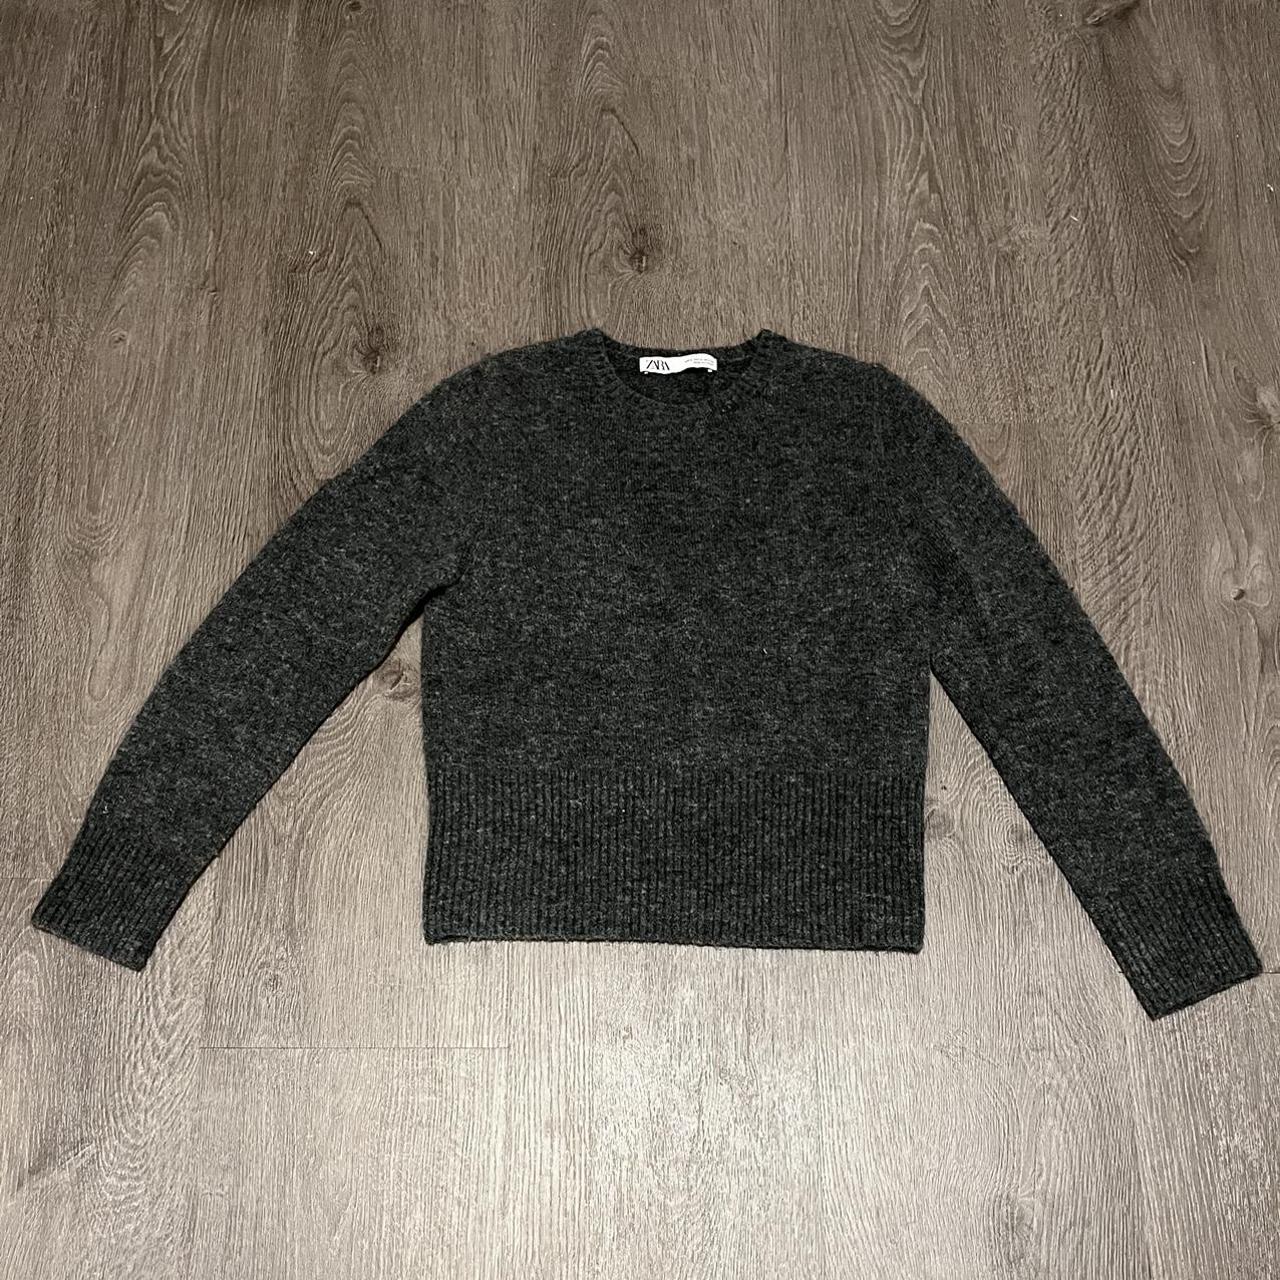 Zara Grey Sweater #greysweater #sweater #zara... - Depop